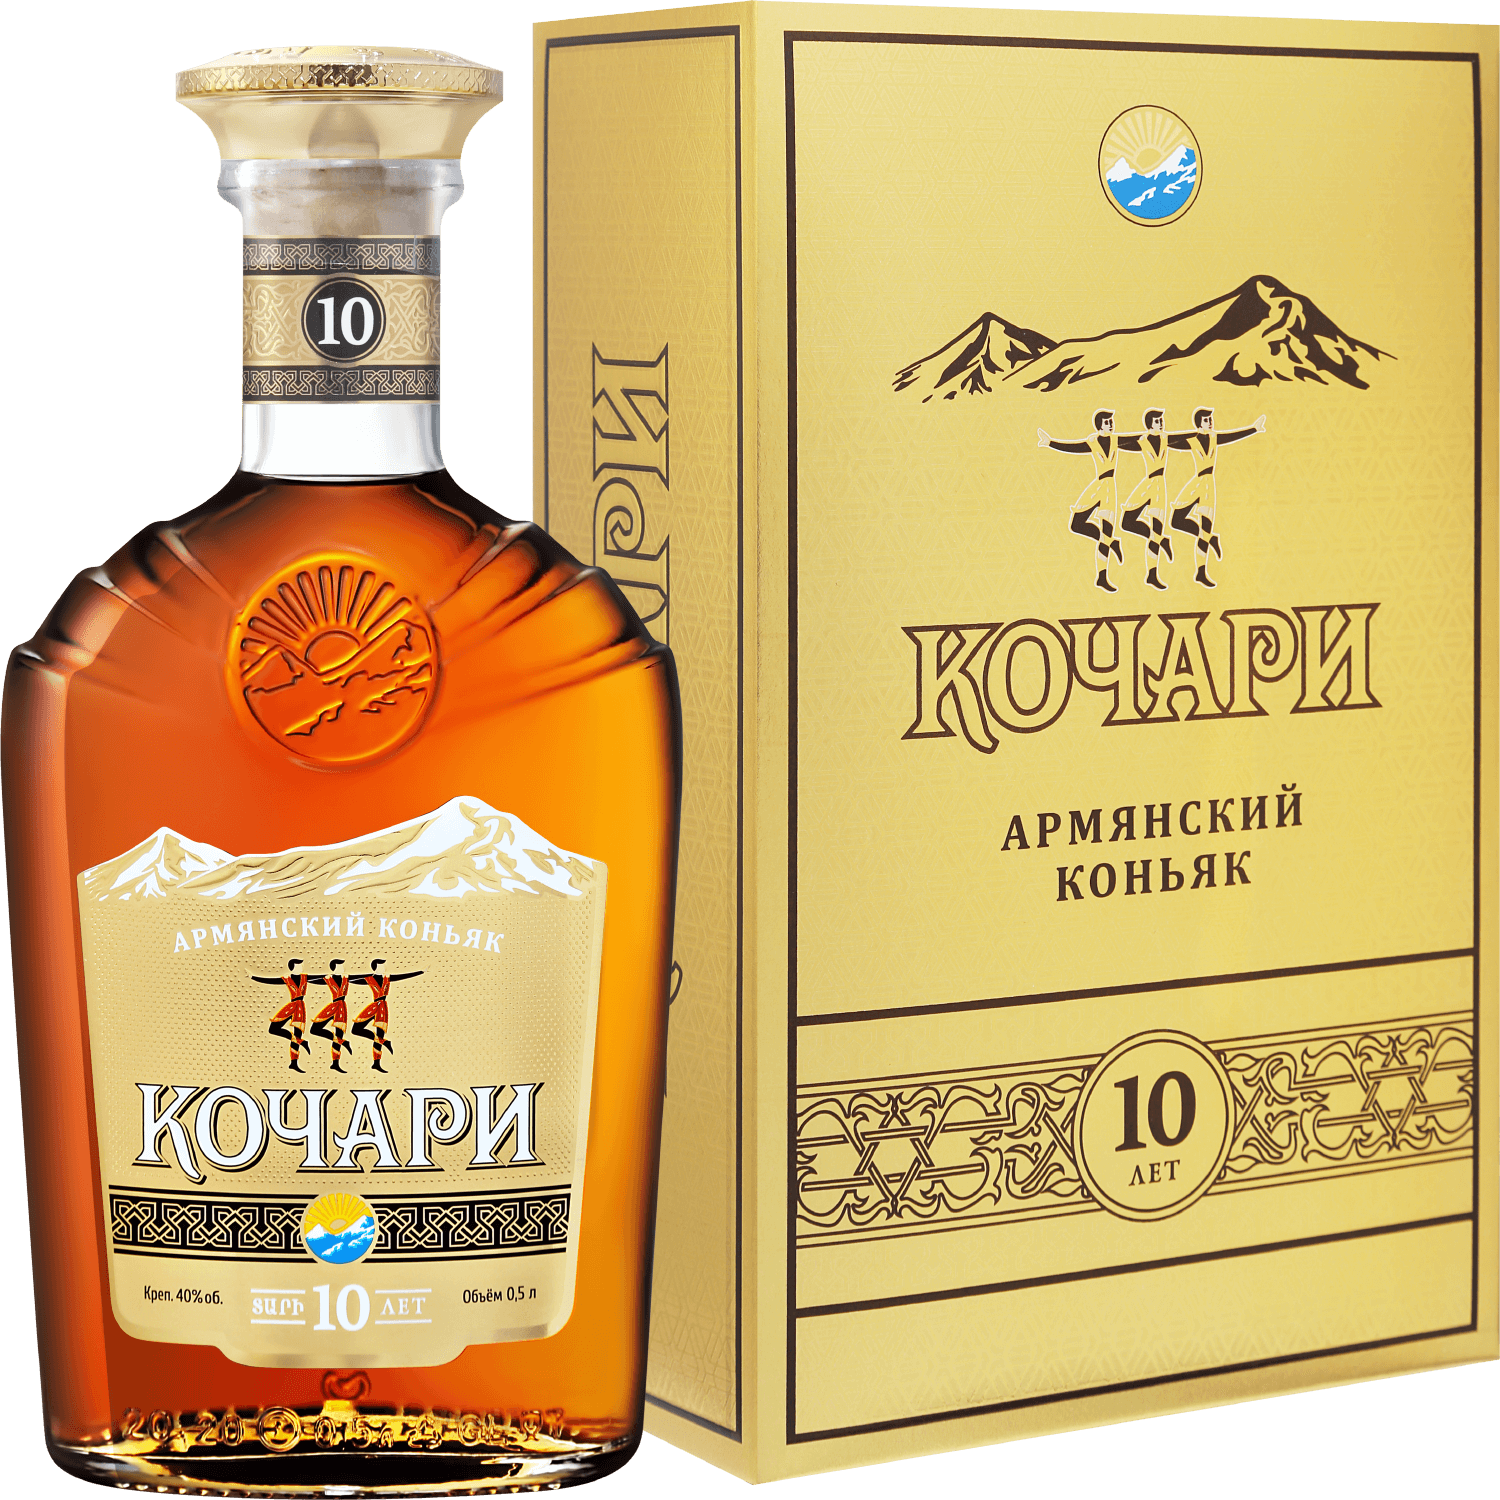 kochari armenian brandy 6 y o Kochari Armenian Brandy 10 Y.O. (gift box)